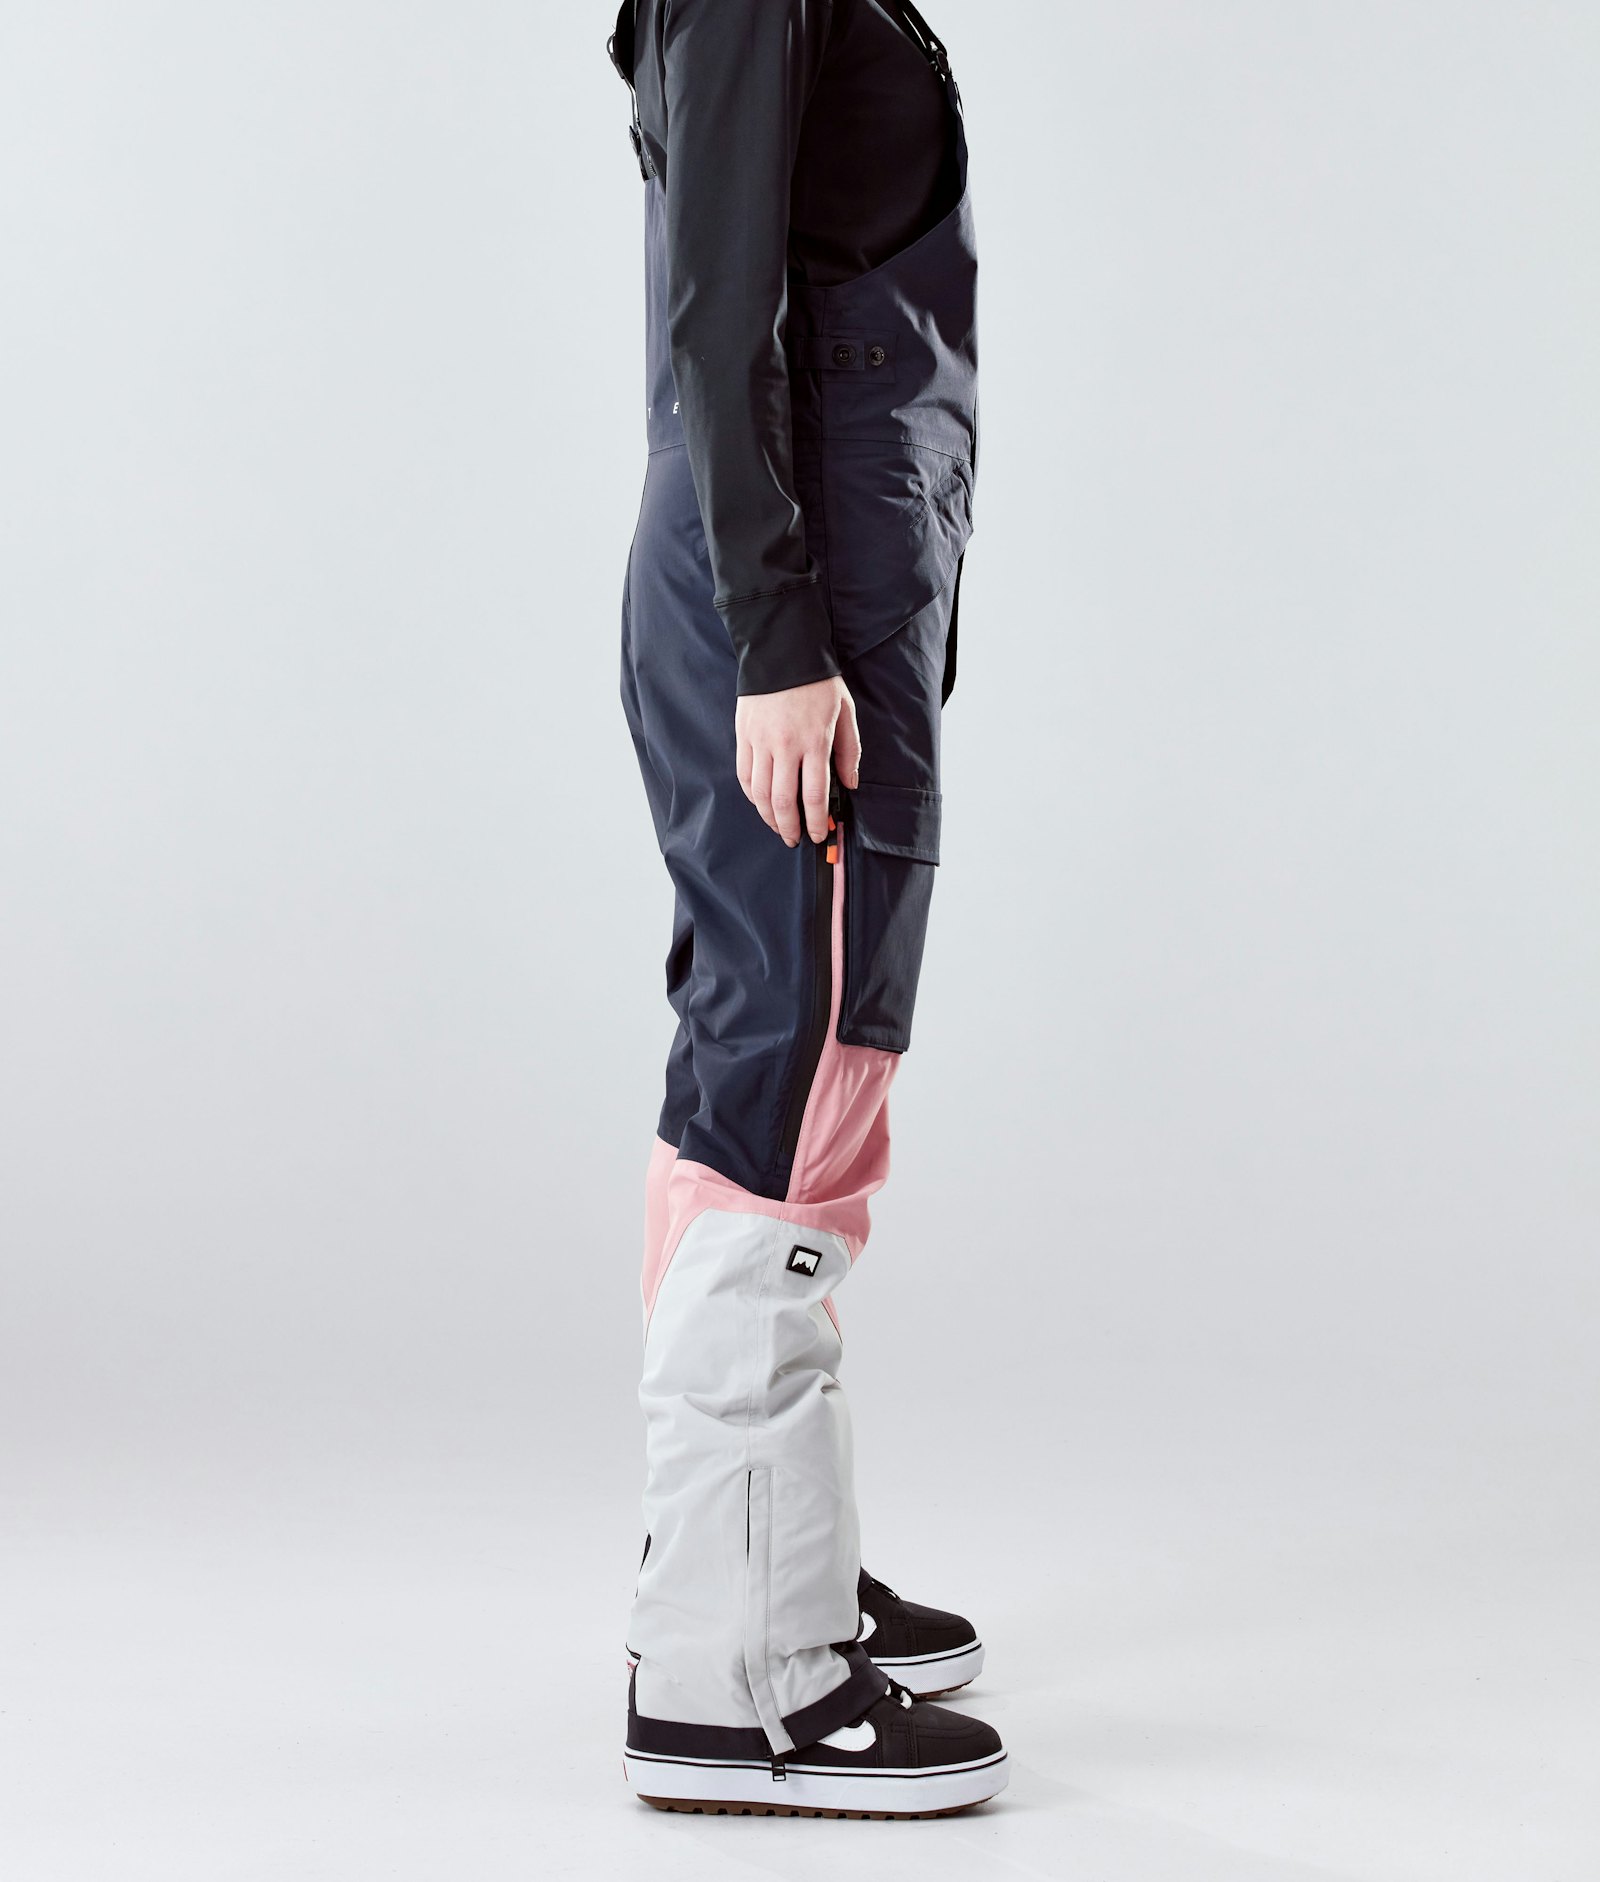 Fawk W 2020 Snowboardhose Damen Marine/Pink/Light Grey